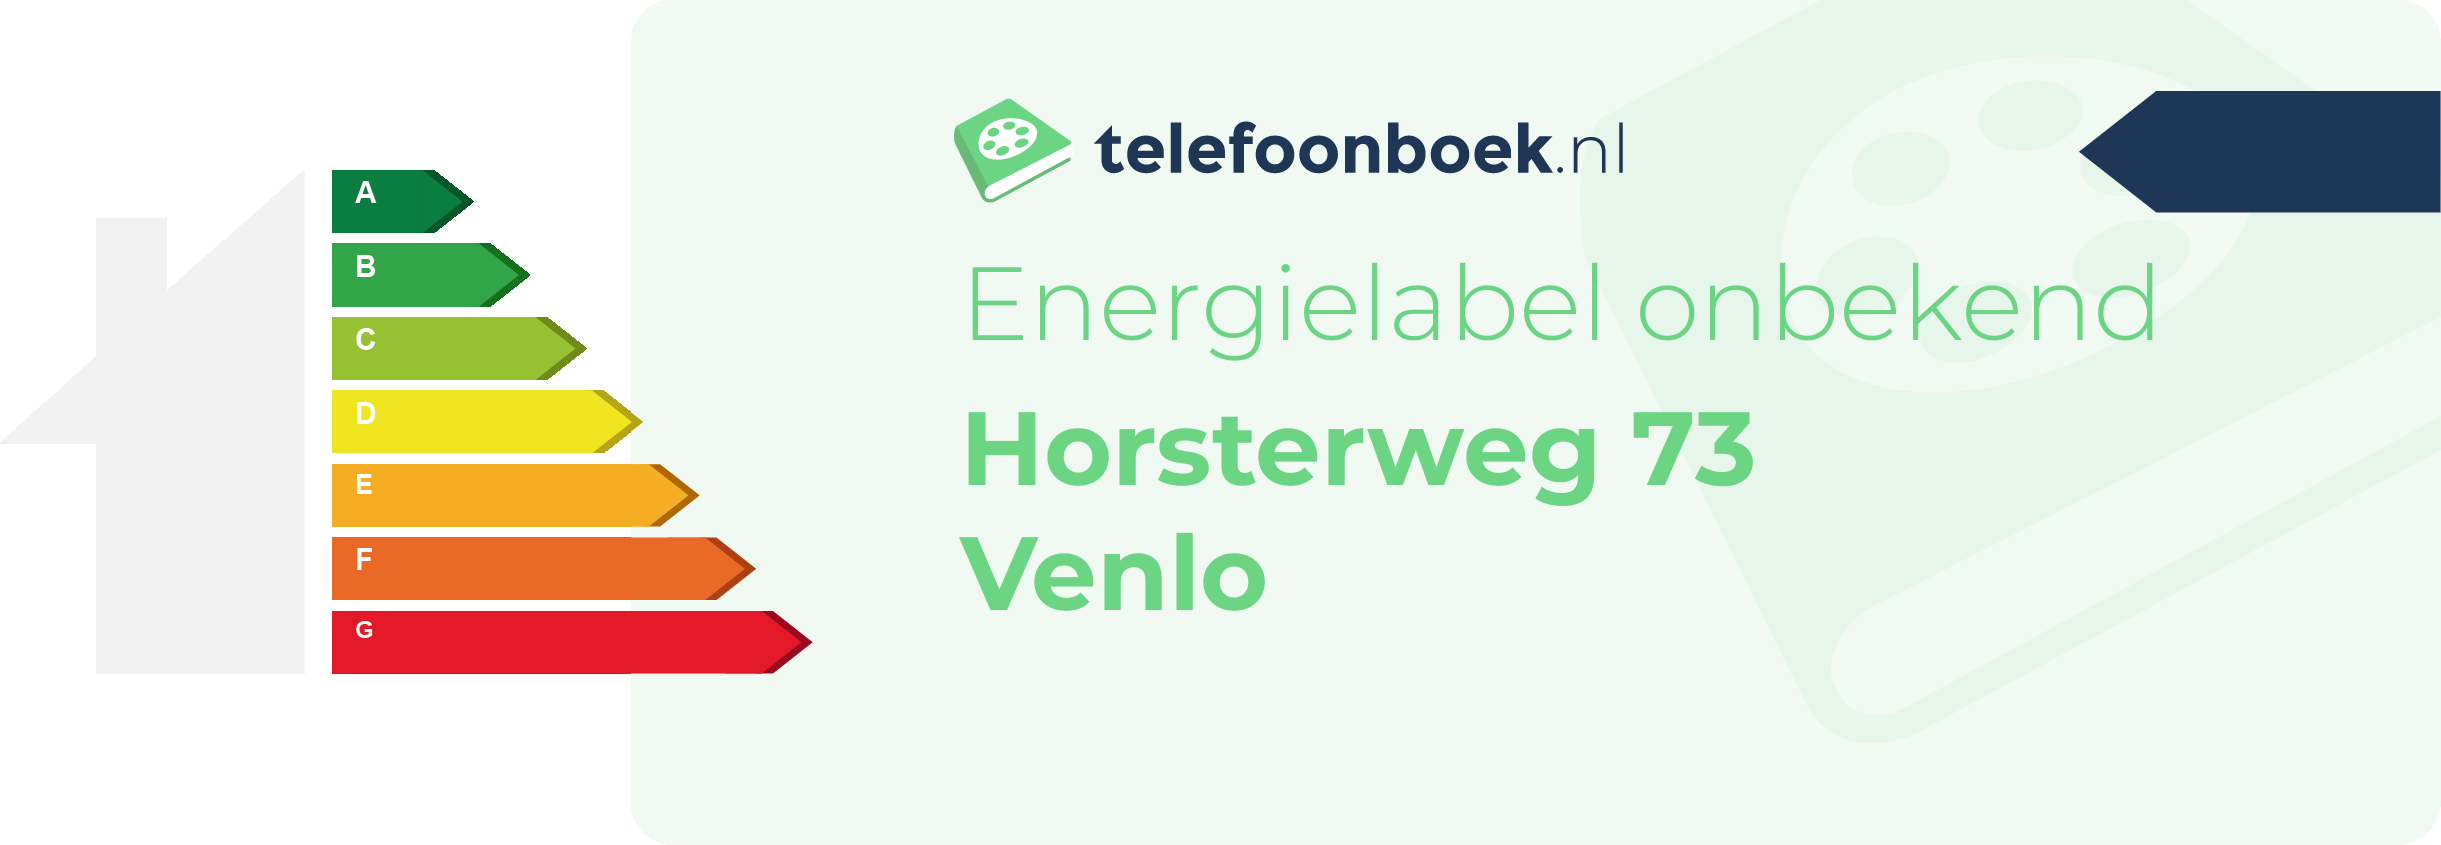 Energielabel Horsterweg 73 Venlo